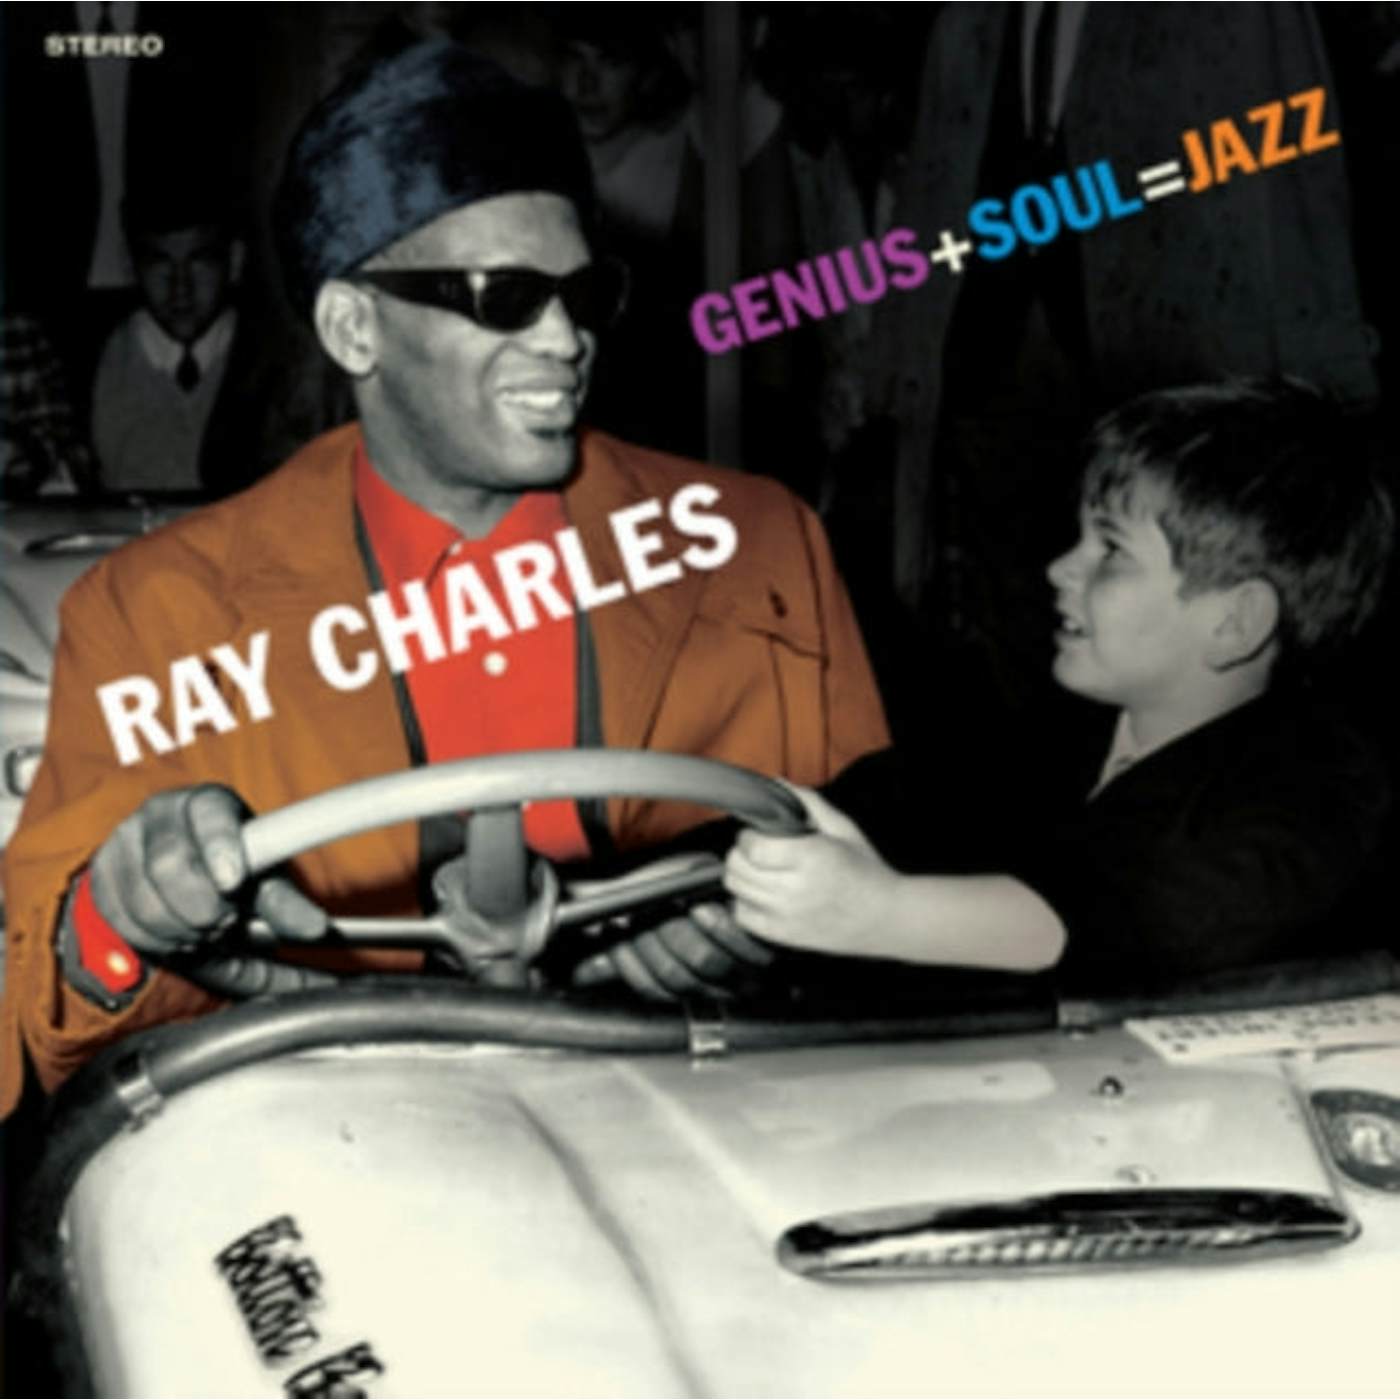 Ray Charles LP Vinyl Record - Genius + Soul= Jazz (+3 Bonus Tracks) (Coloured Vinyl)